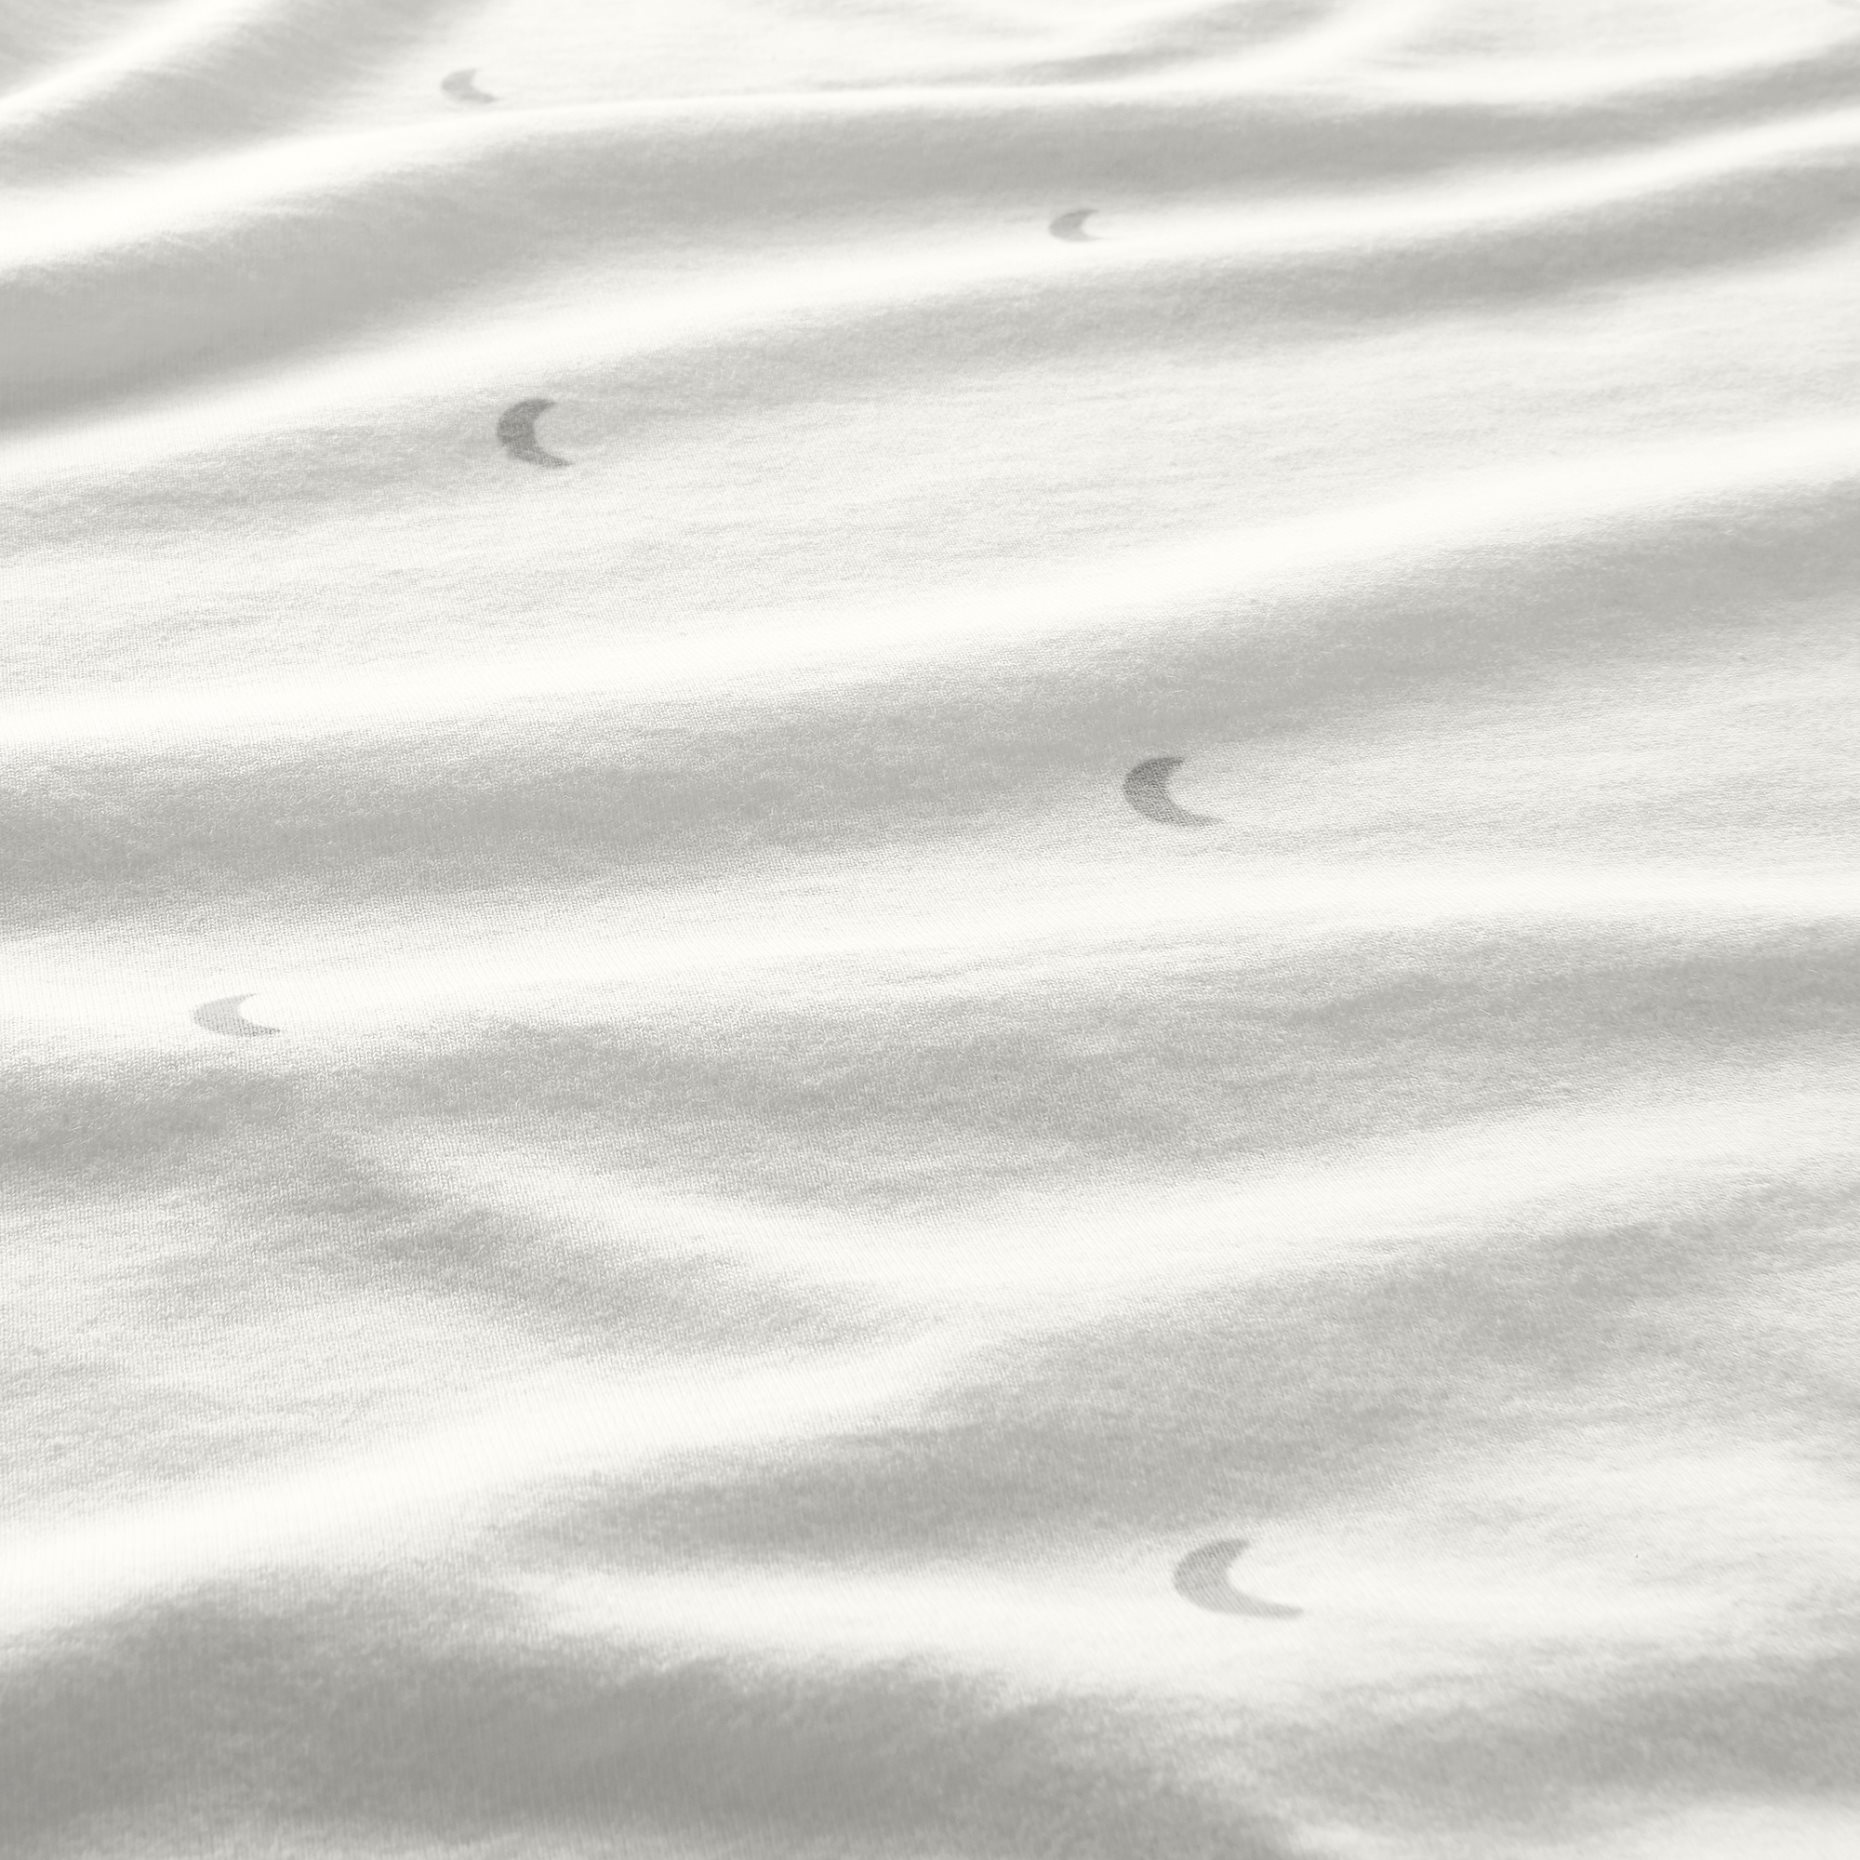 LENAST, quilt cover/pillowcase for cot, 110x125/35x55 cm, 304.923.03